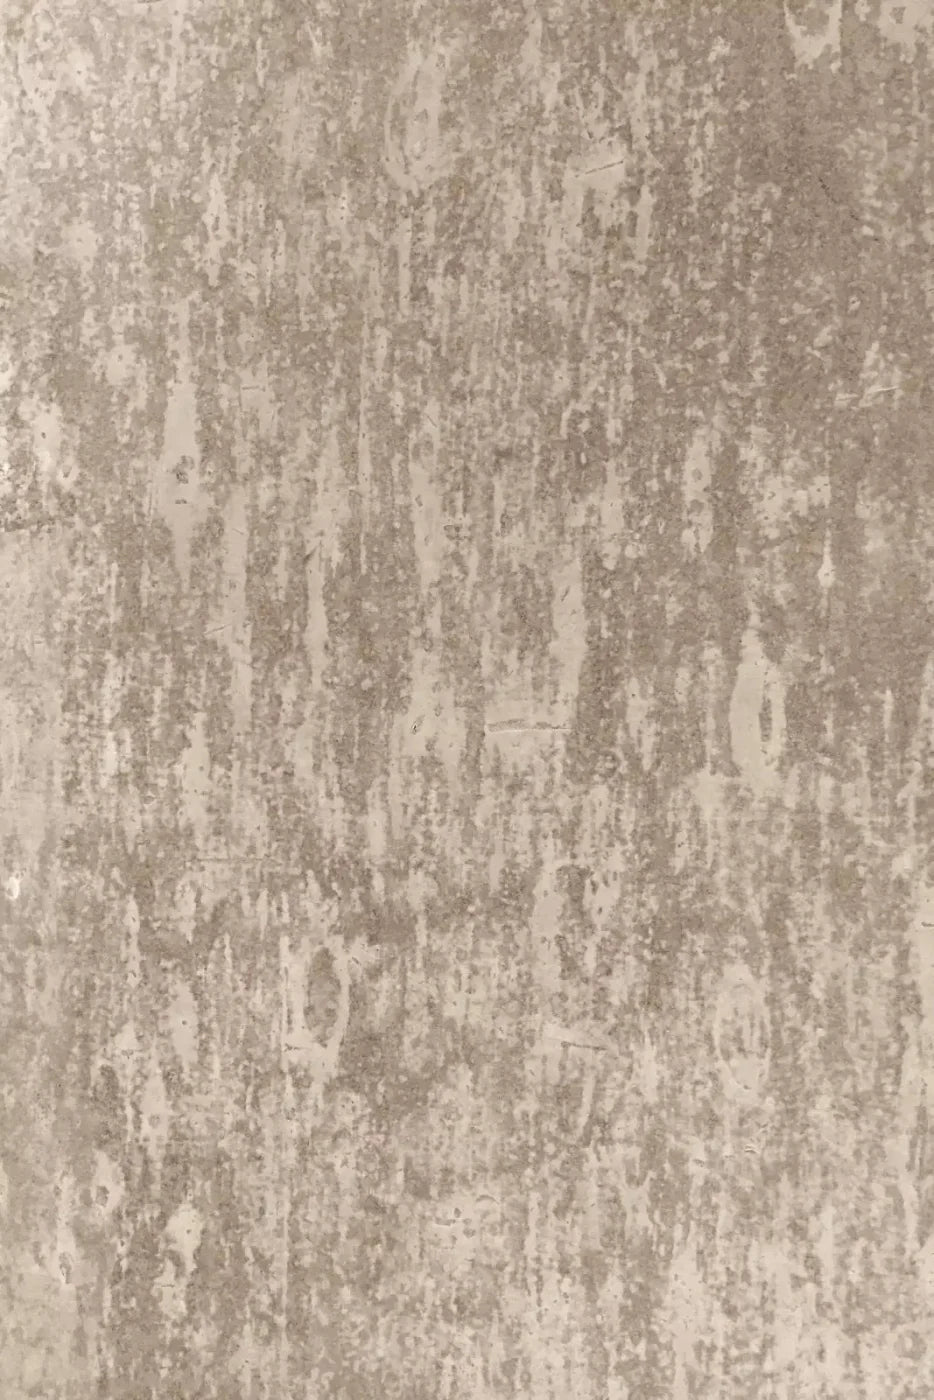 Ernesto 4X5 Rubbermat Floor ( 48 X 60 Inch ) Backdrop